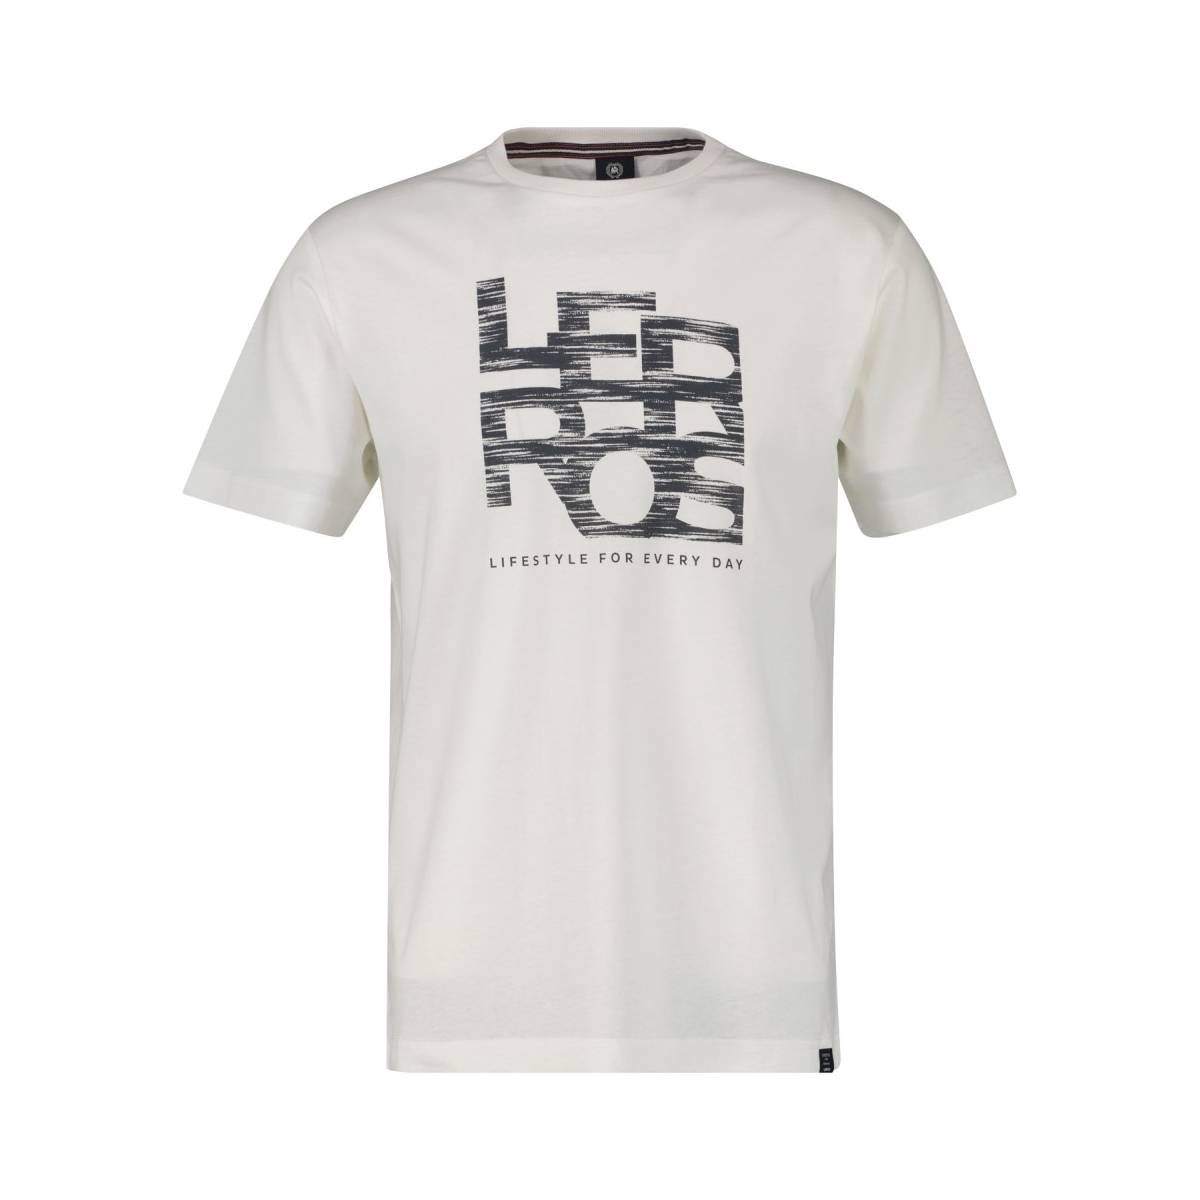 LERROS  t shirts ecru -  model 23d3012 - Herenkleding t shirts ecru